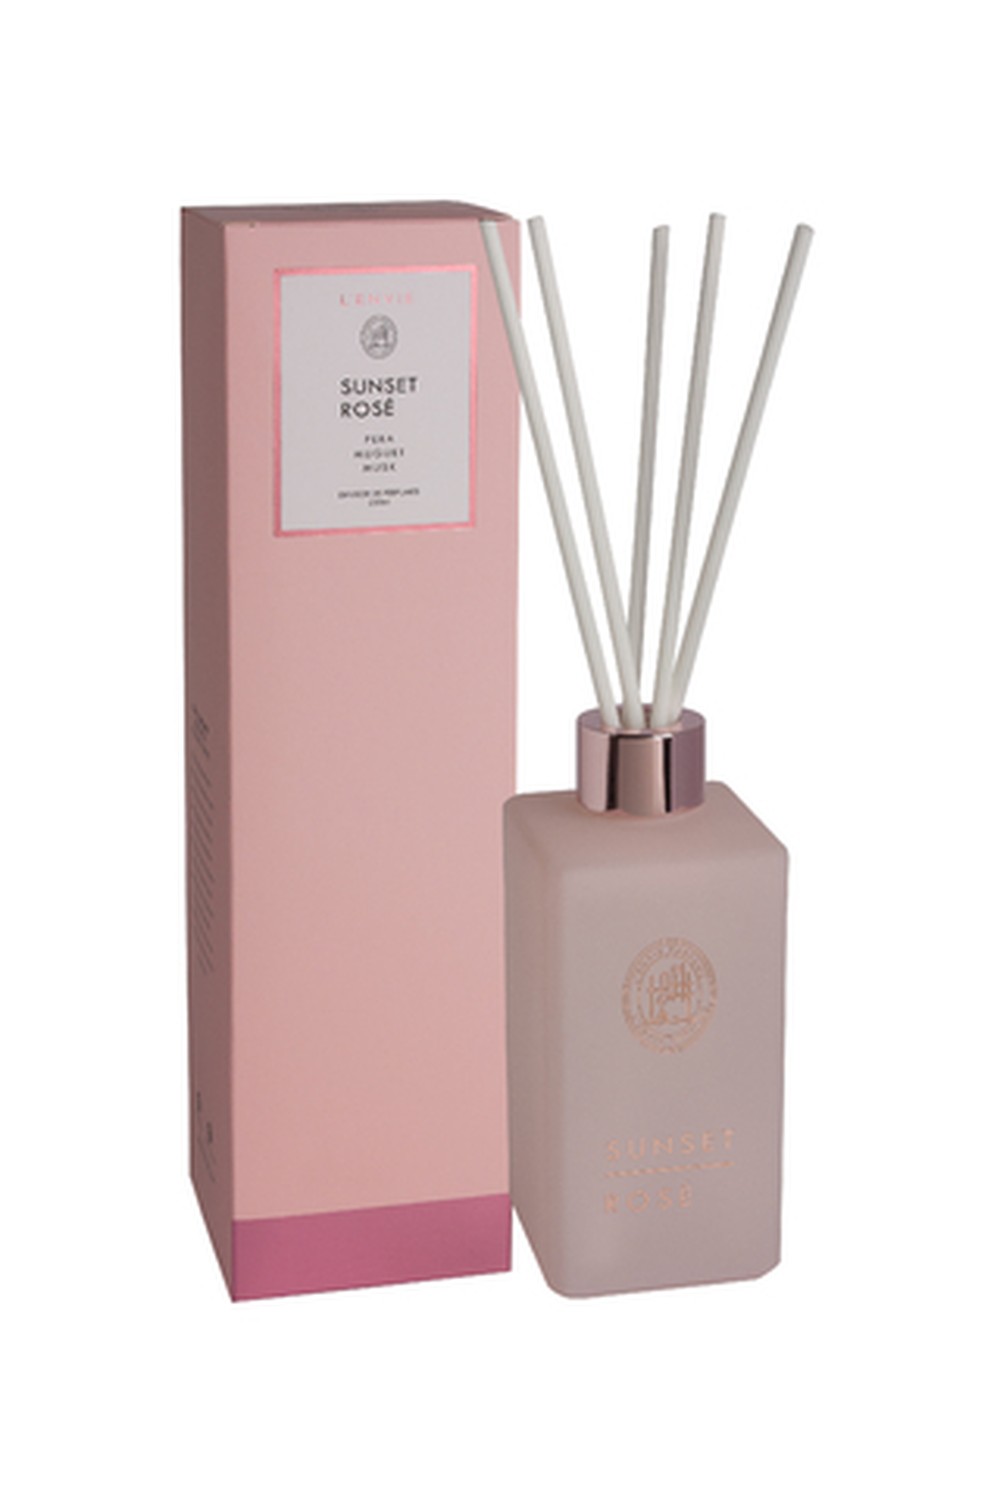 Difusor de Perfume Sunset Rosé - Elementos 250ml